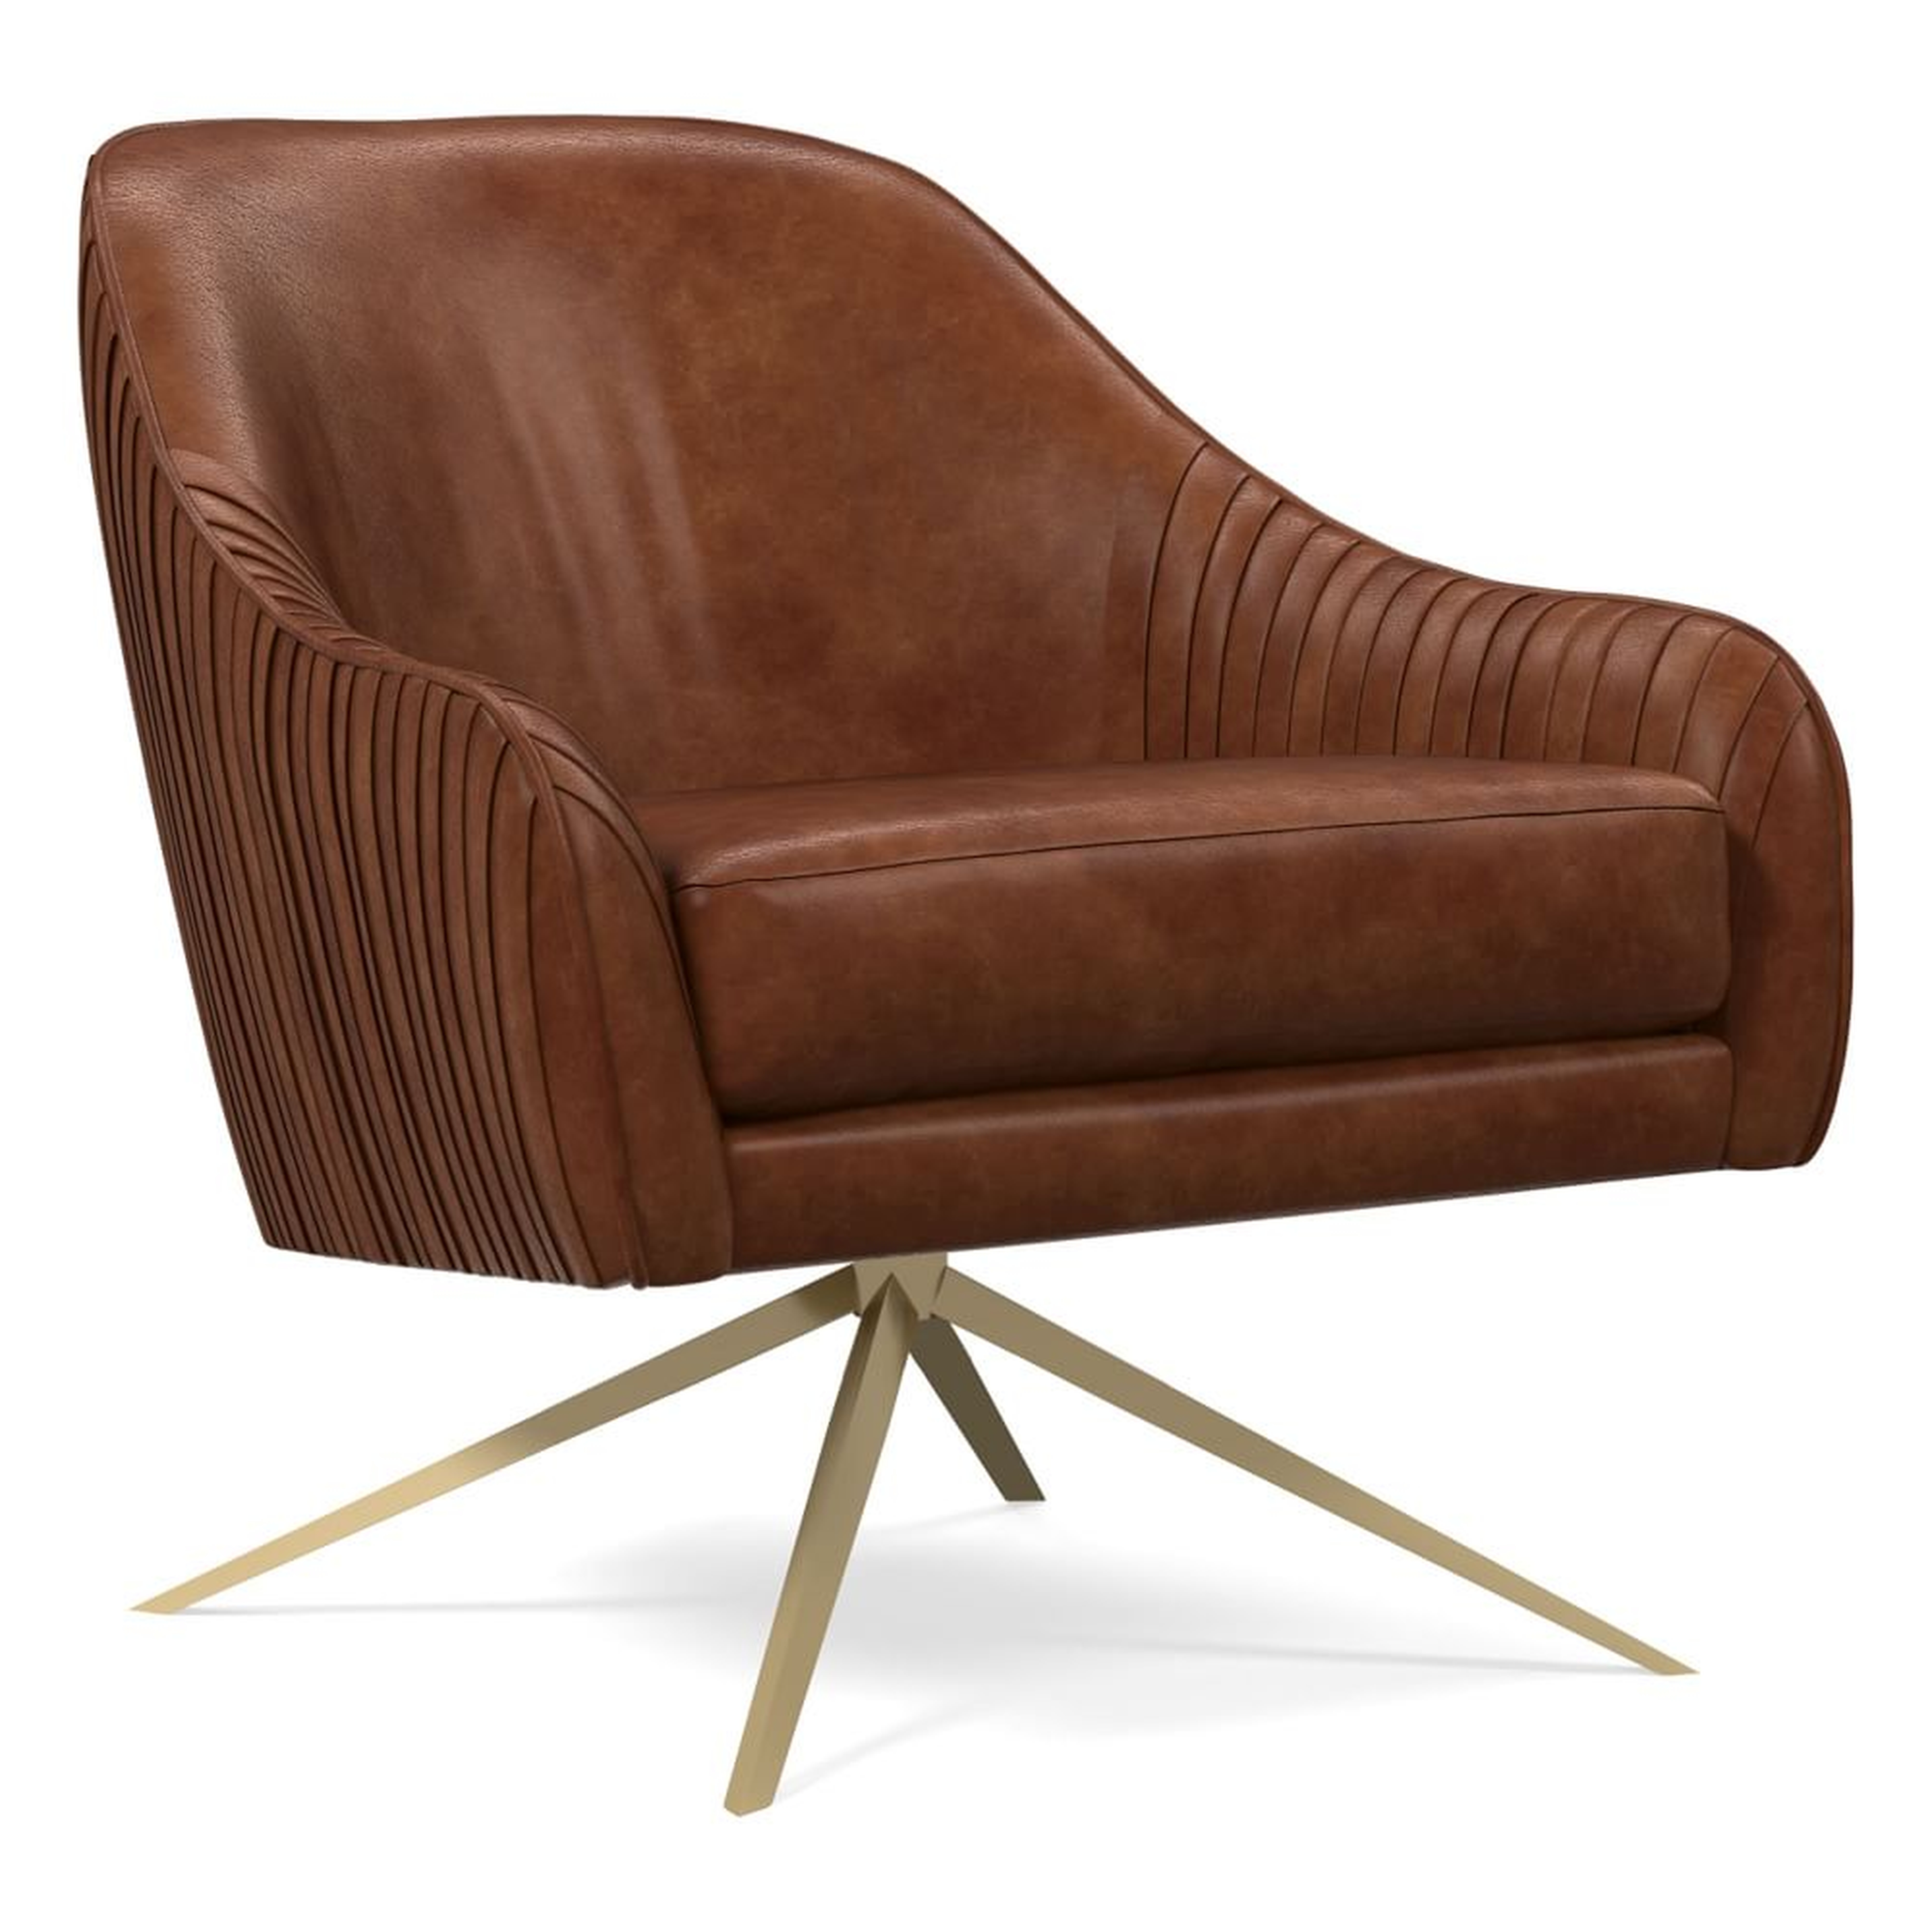 Roar & Rabbit Swivel Leather Chair, Poly, Weston Leather, Molasses, Antique Brass - West Elm